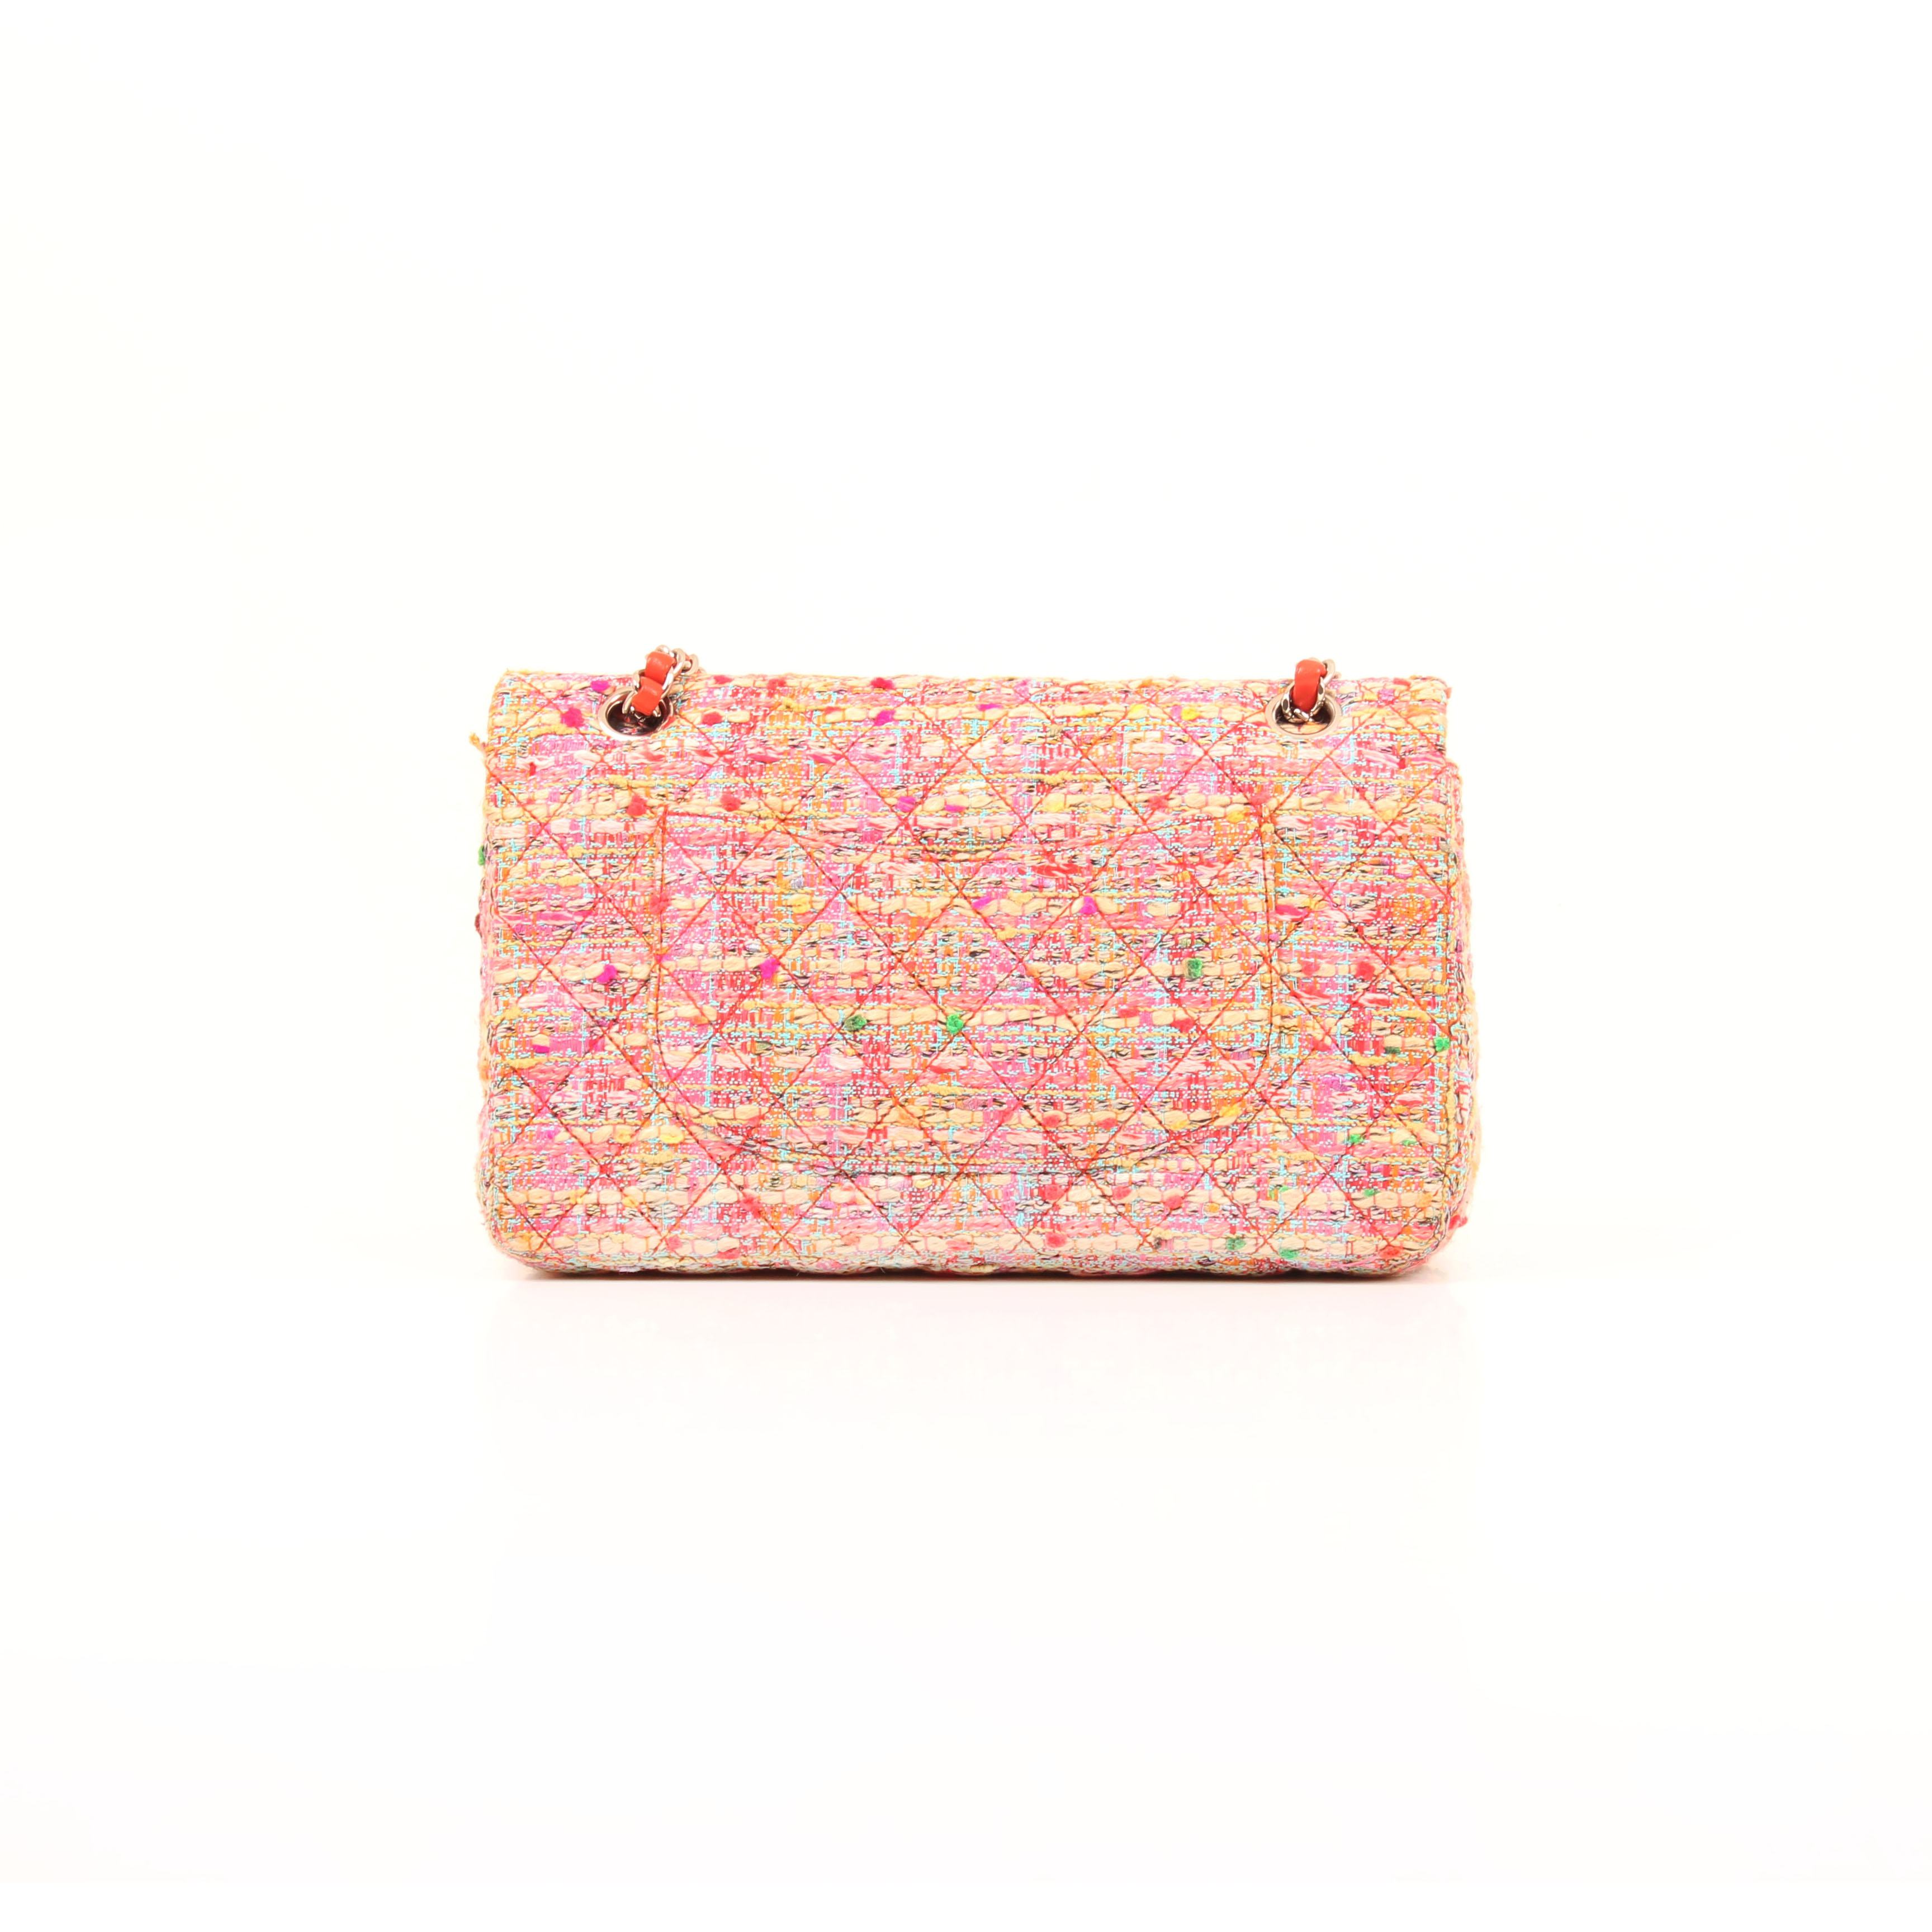 Imagen trasera del bolso chanel timeless double flap en tweed rosa multicolor fluor